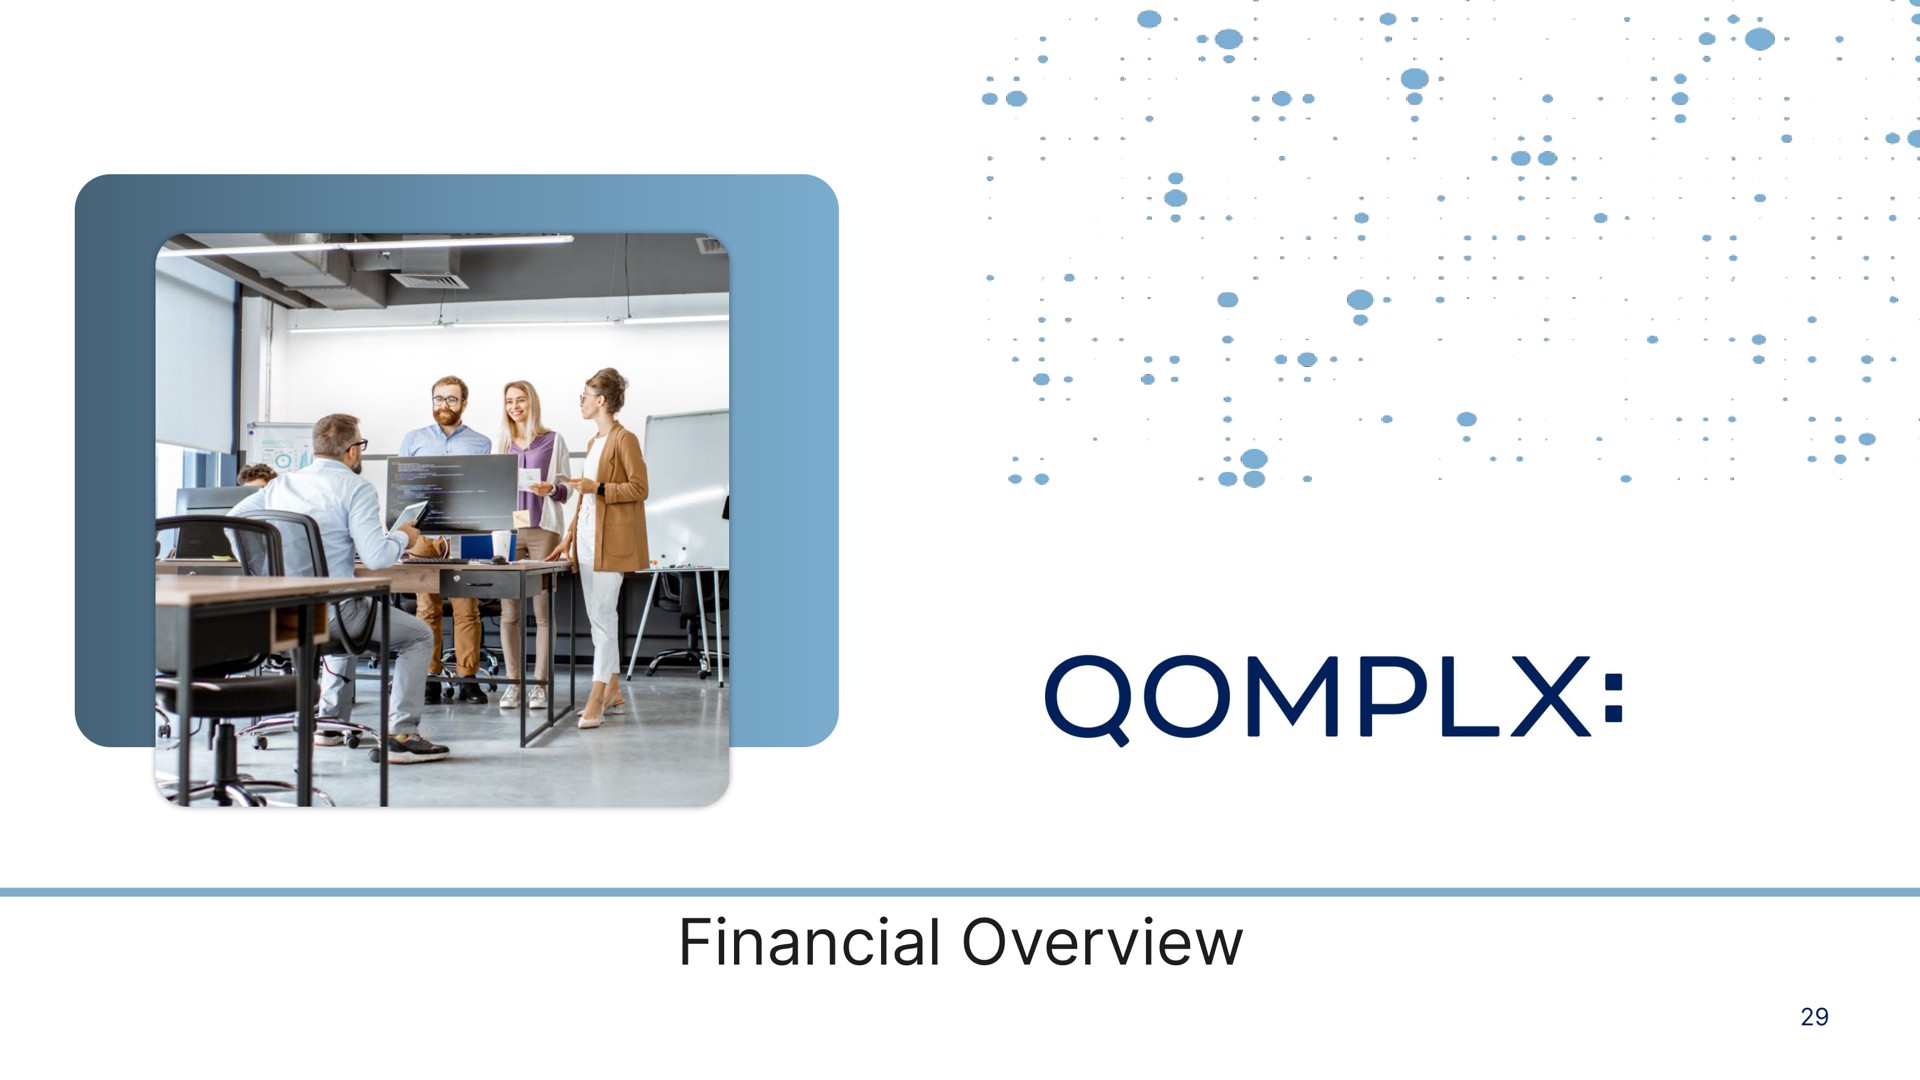 financial overview | Qomplx